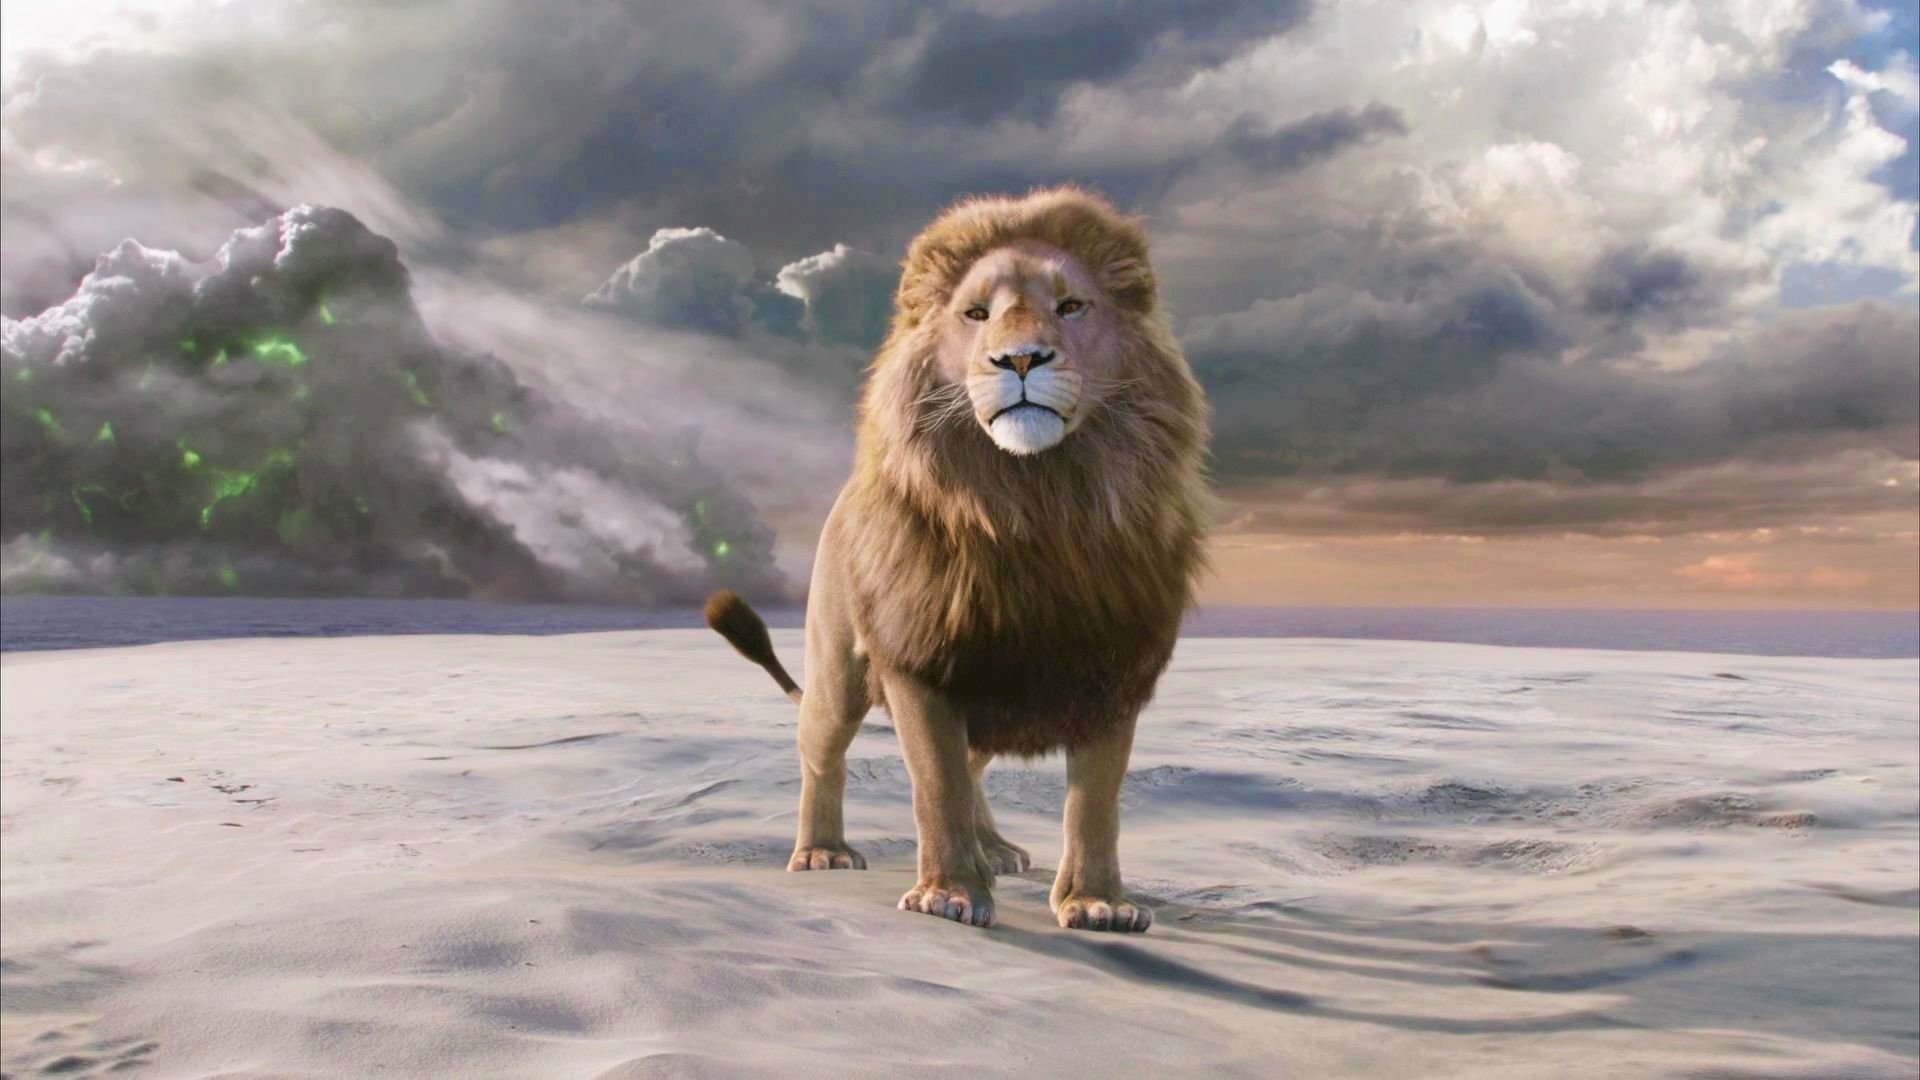 Aslan - Le Monde de Narnia fond d'écran (6899693) - fanpop